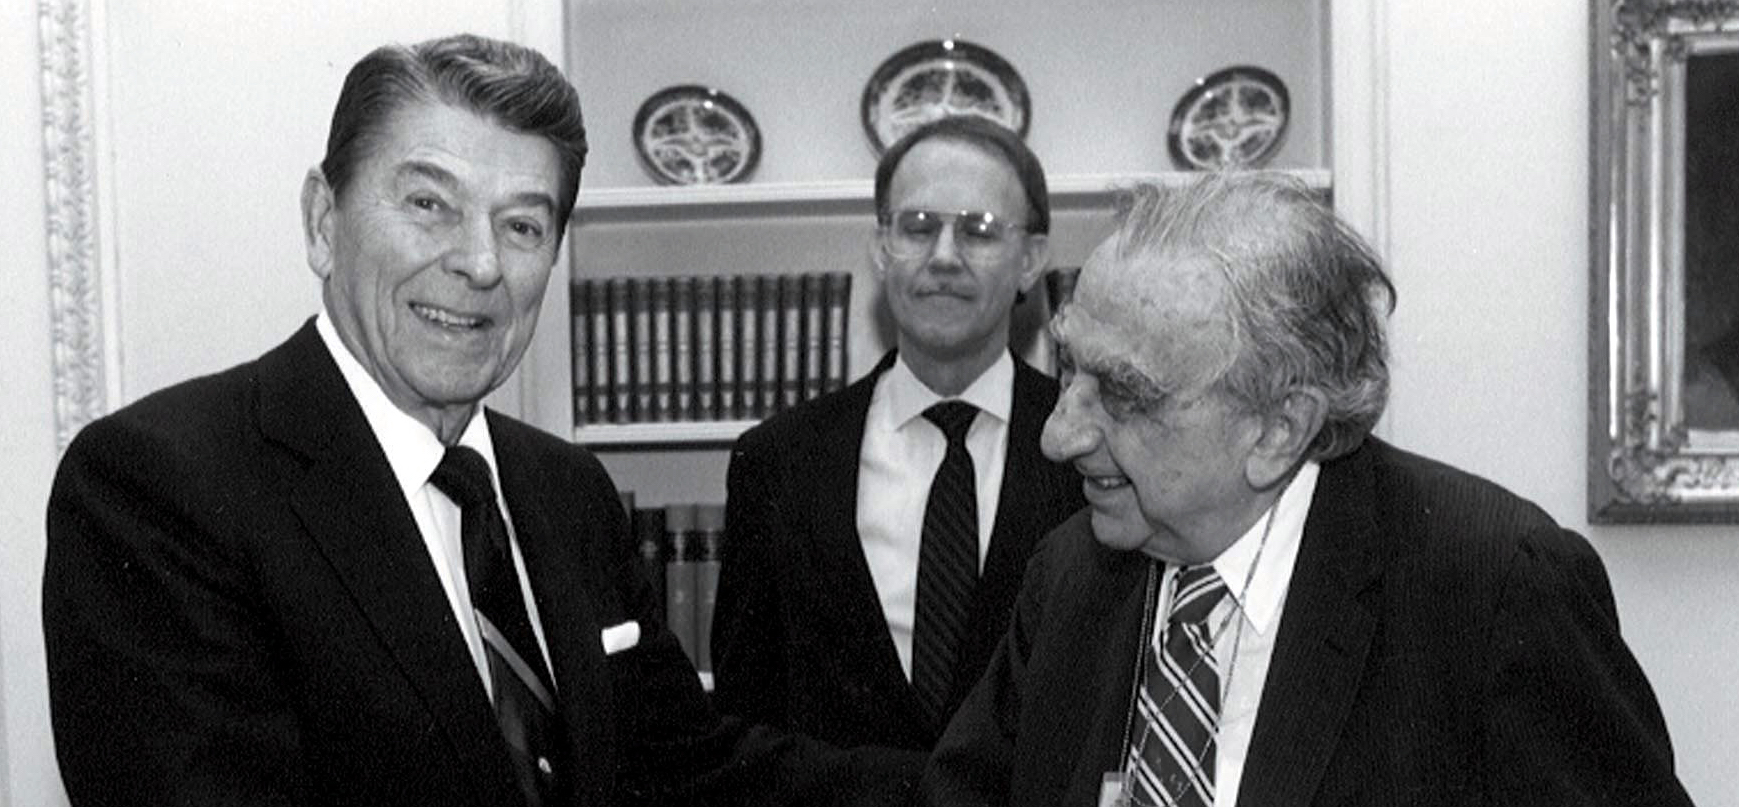 Teller and Reagan